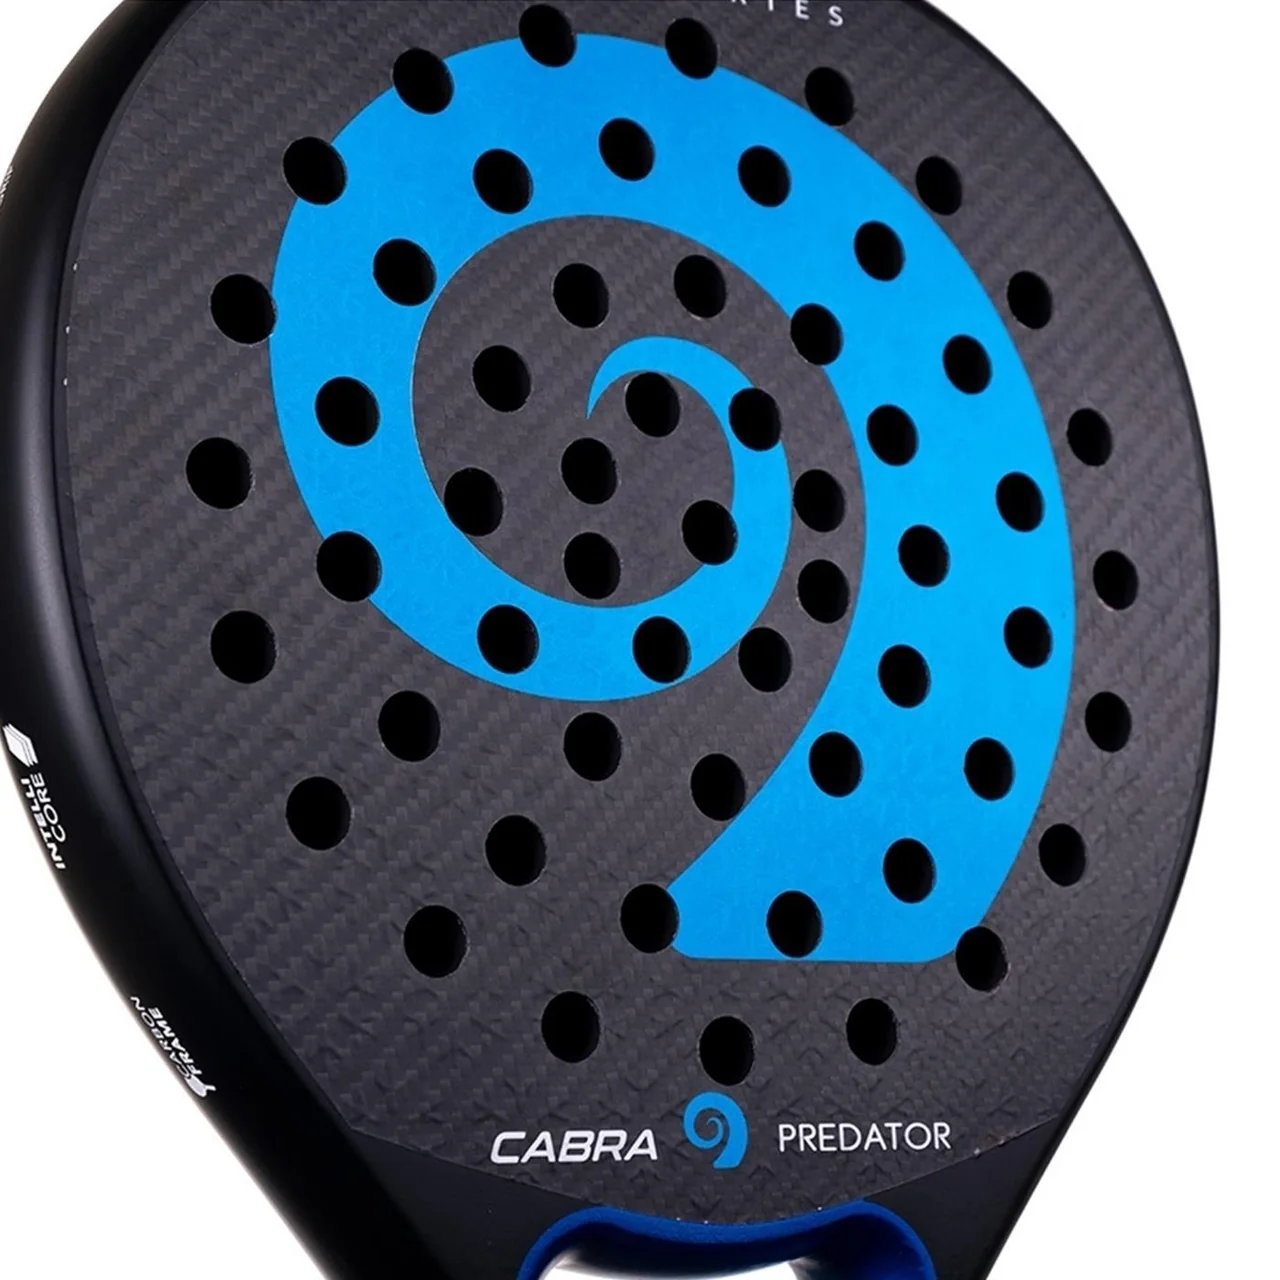 Cabra Pro Predator 2 for 1 tilbud